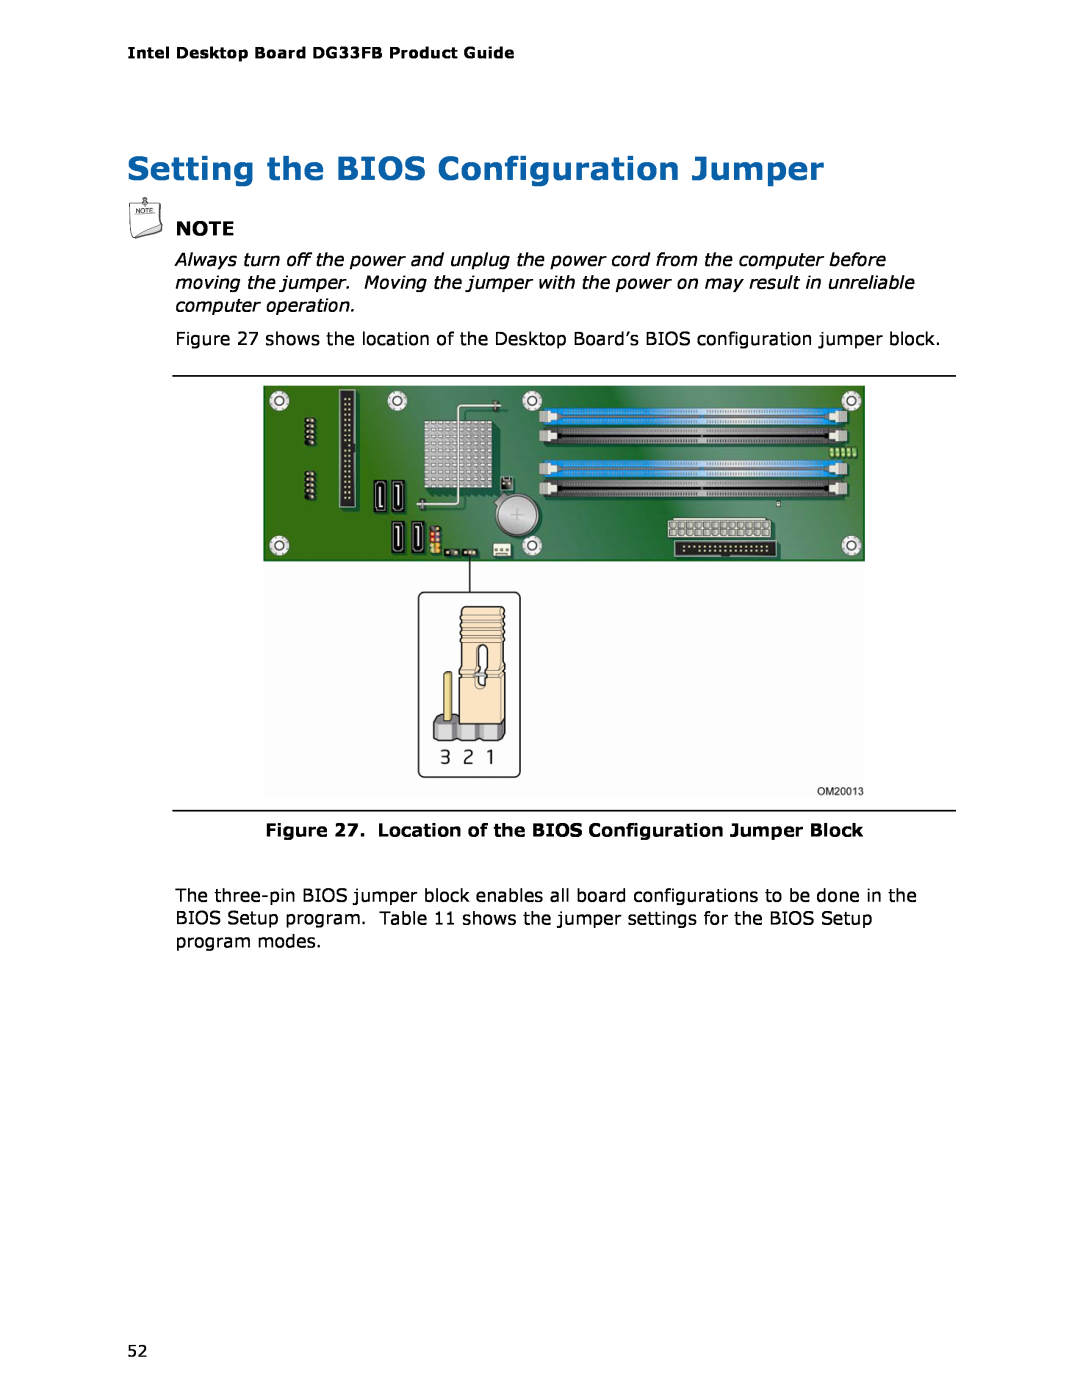 Intel DG33FB manual Setting the BIOS Configuration Jumper 